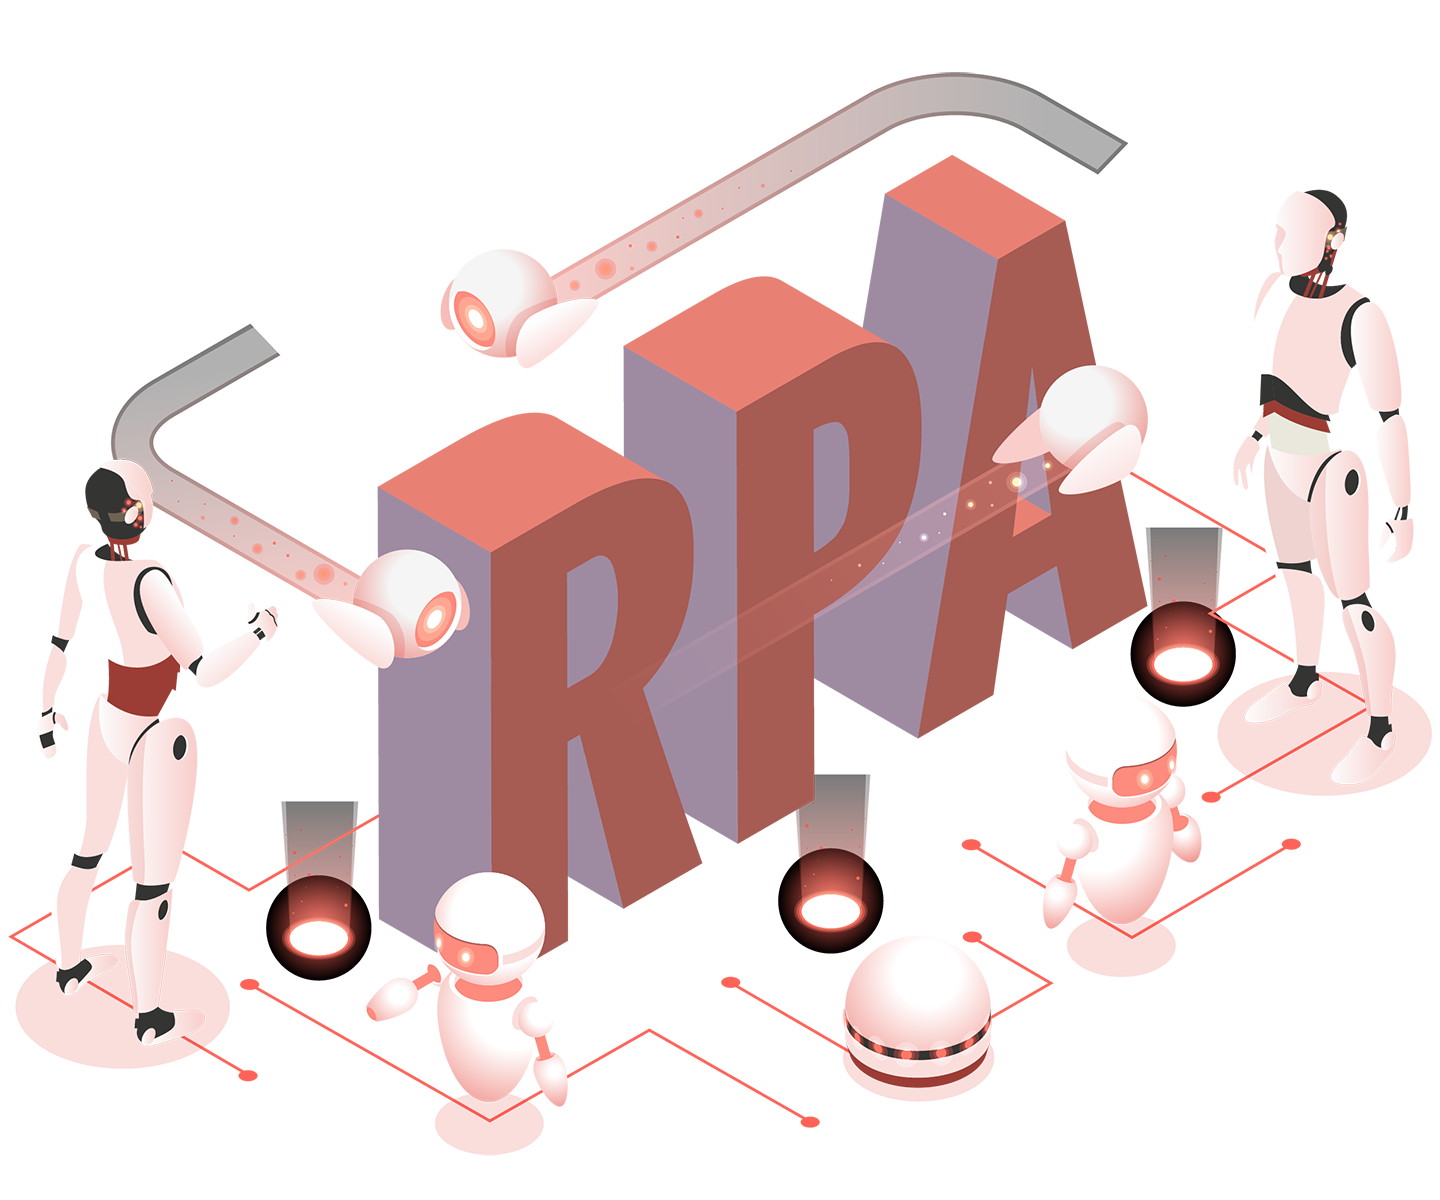 Robots Surrounding RPA sign